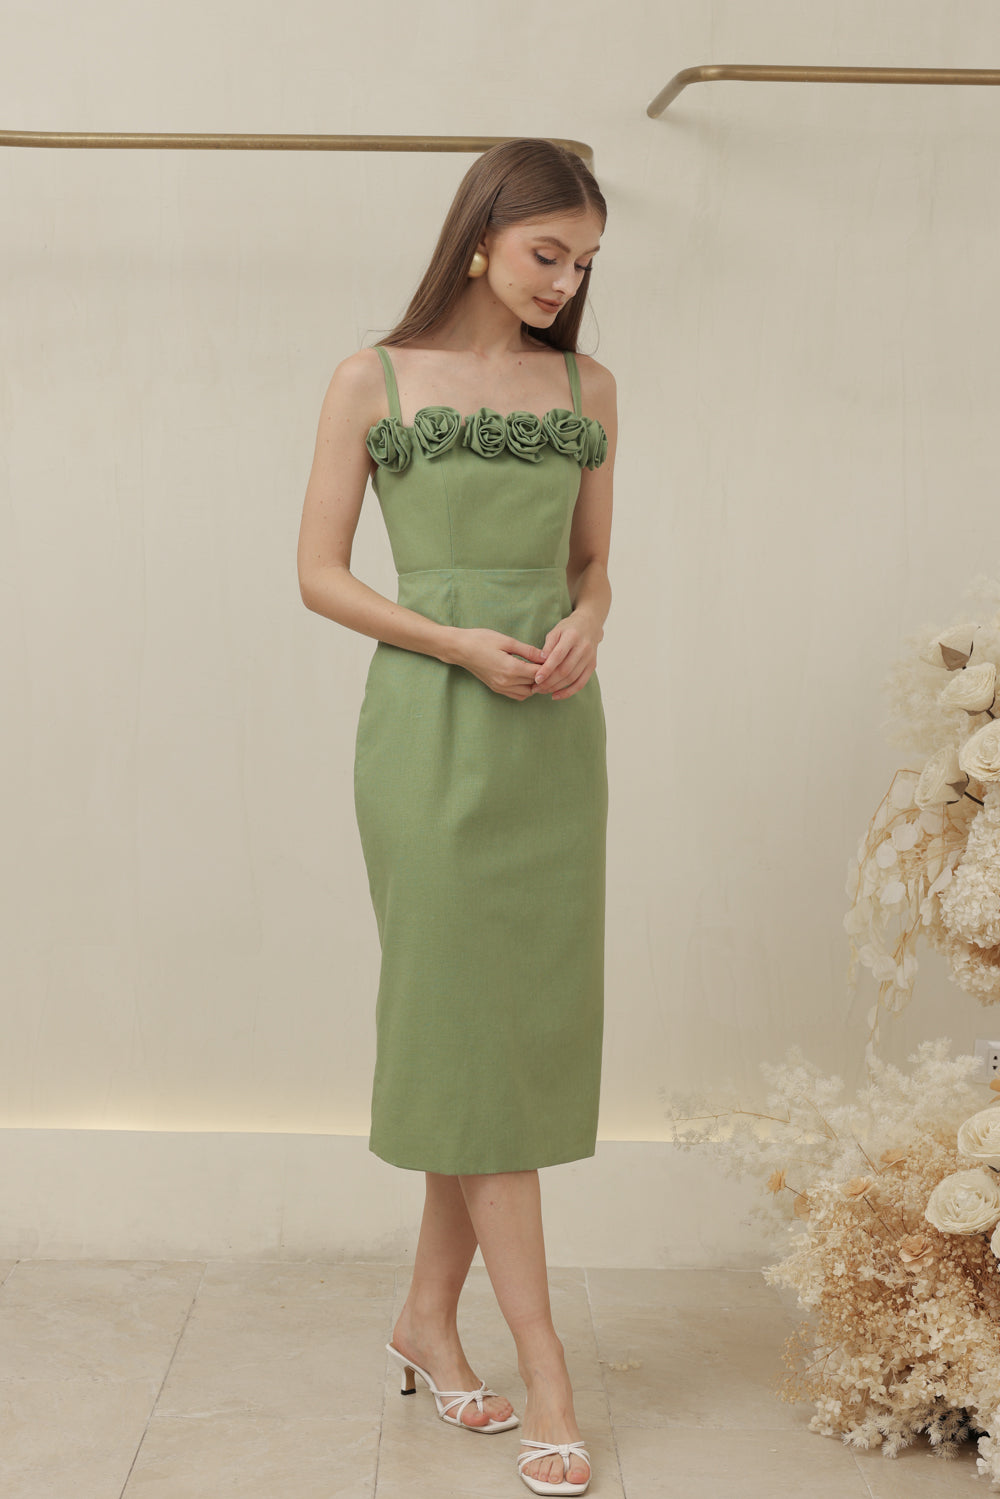 MONET DRESS Straight Neckline Strappy Midi Pencil Skirt Dress with Floral Details (Avocado Green Linen)